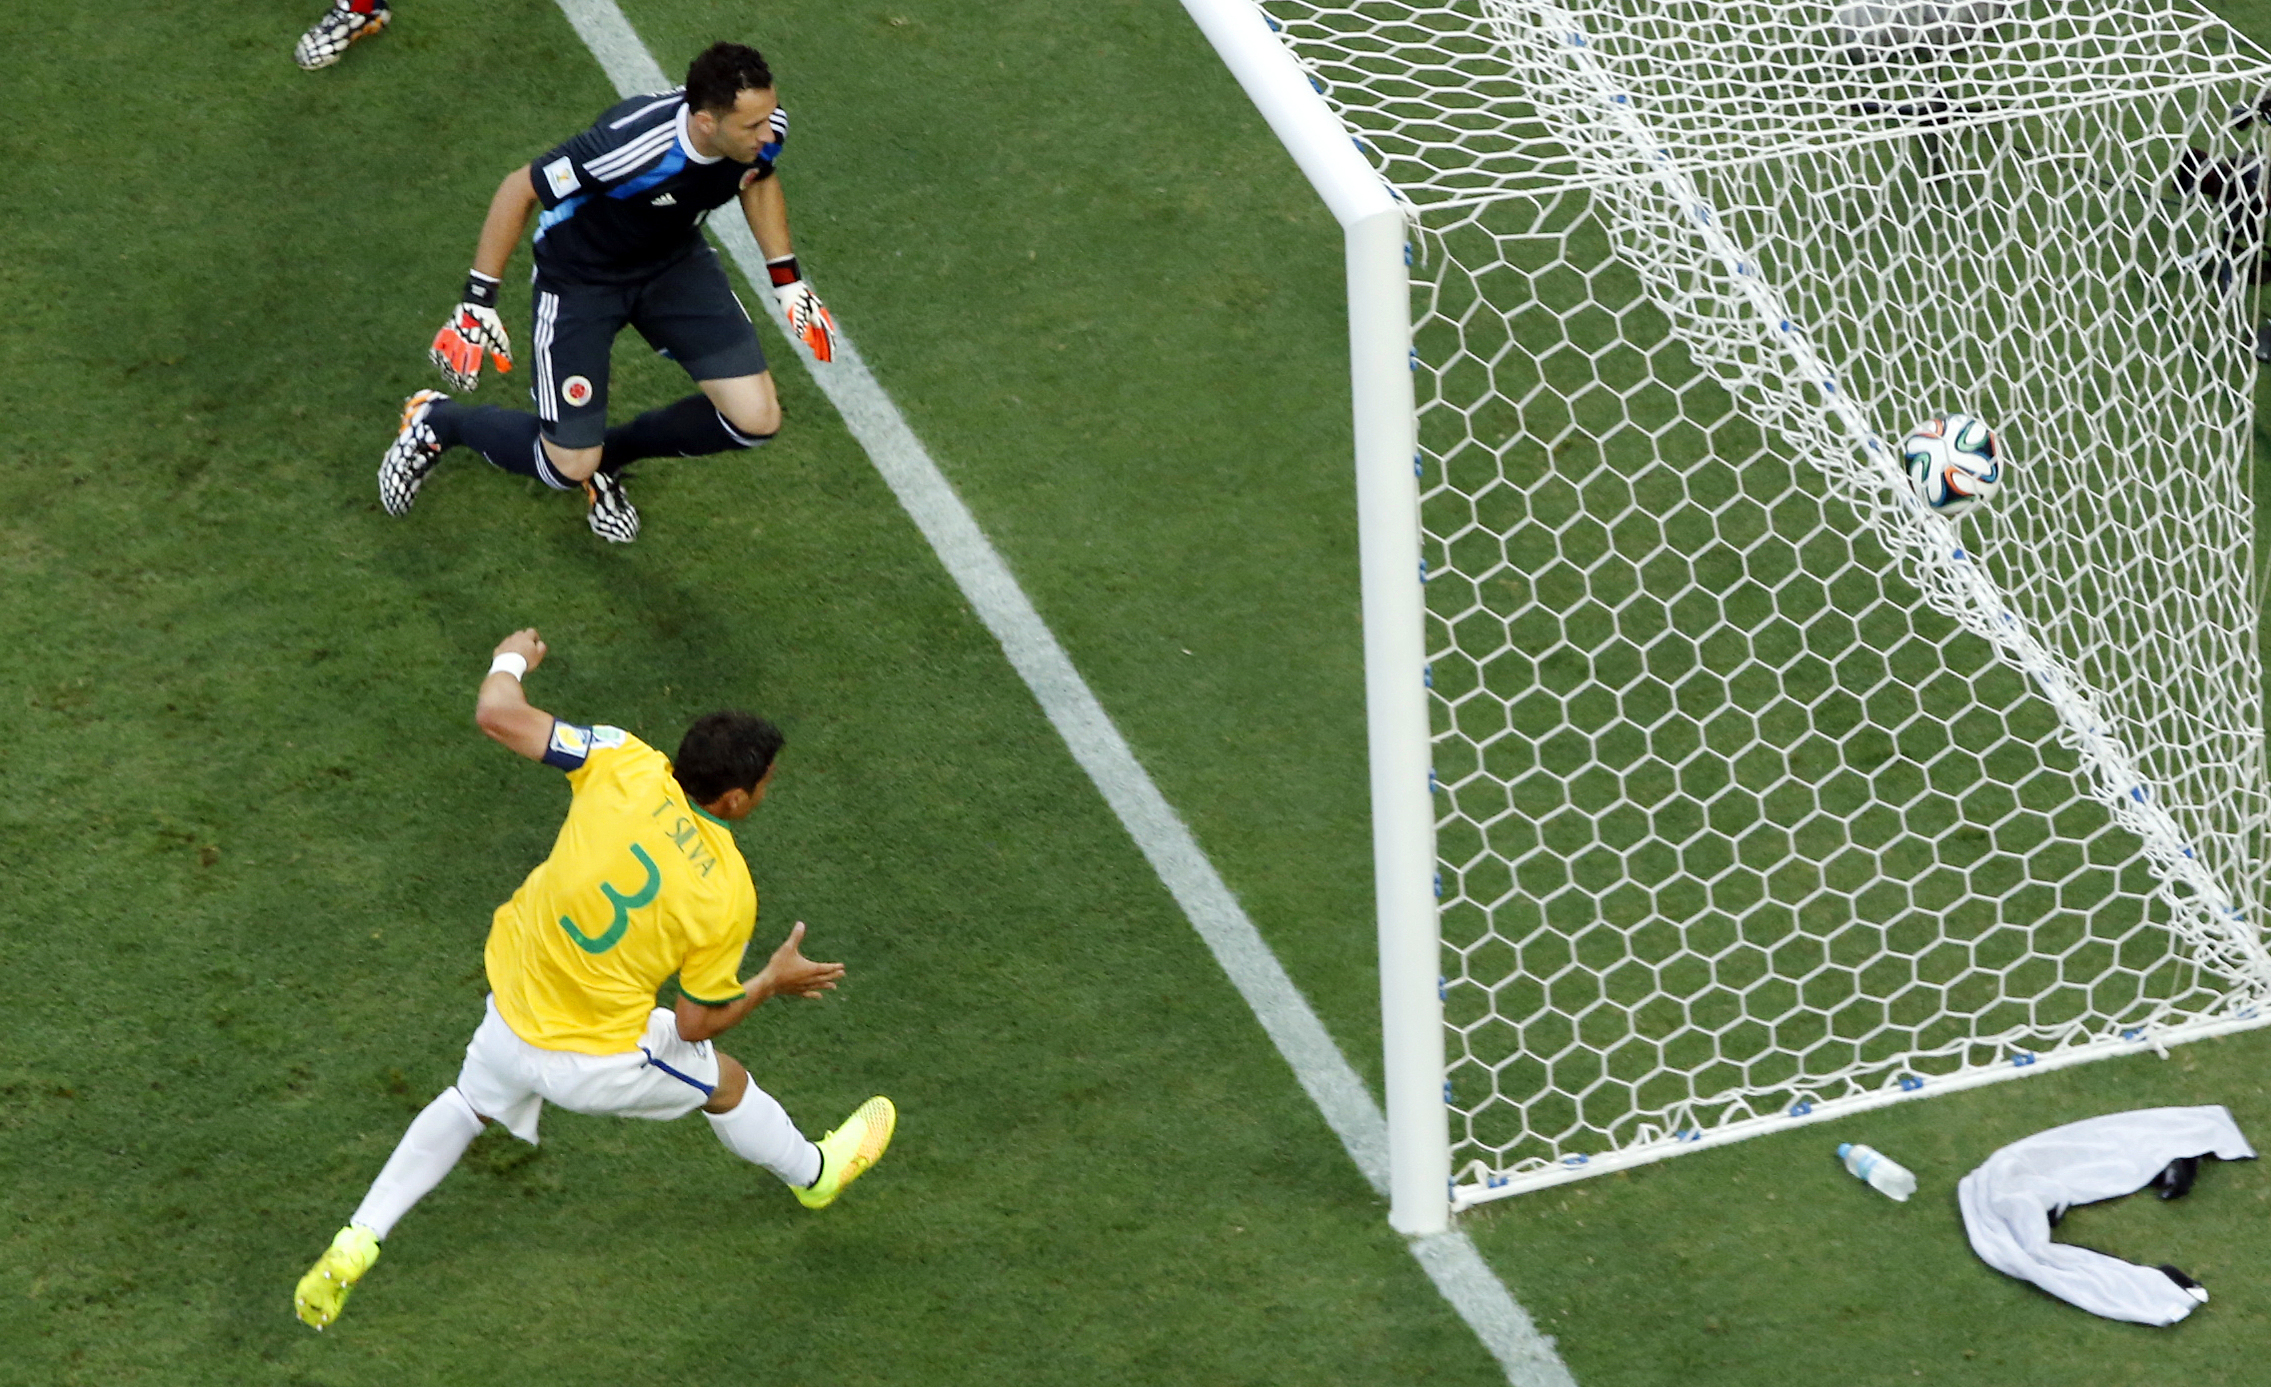 EBC | Brasil vence Colômbia por 2 a 1 e está nas semifinais da Copa do Mundo